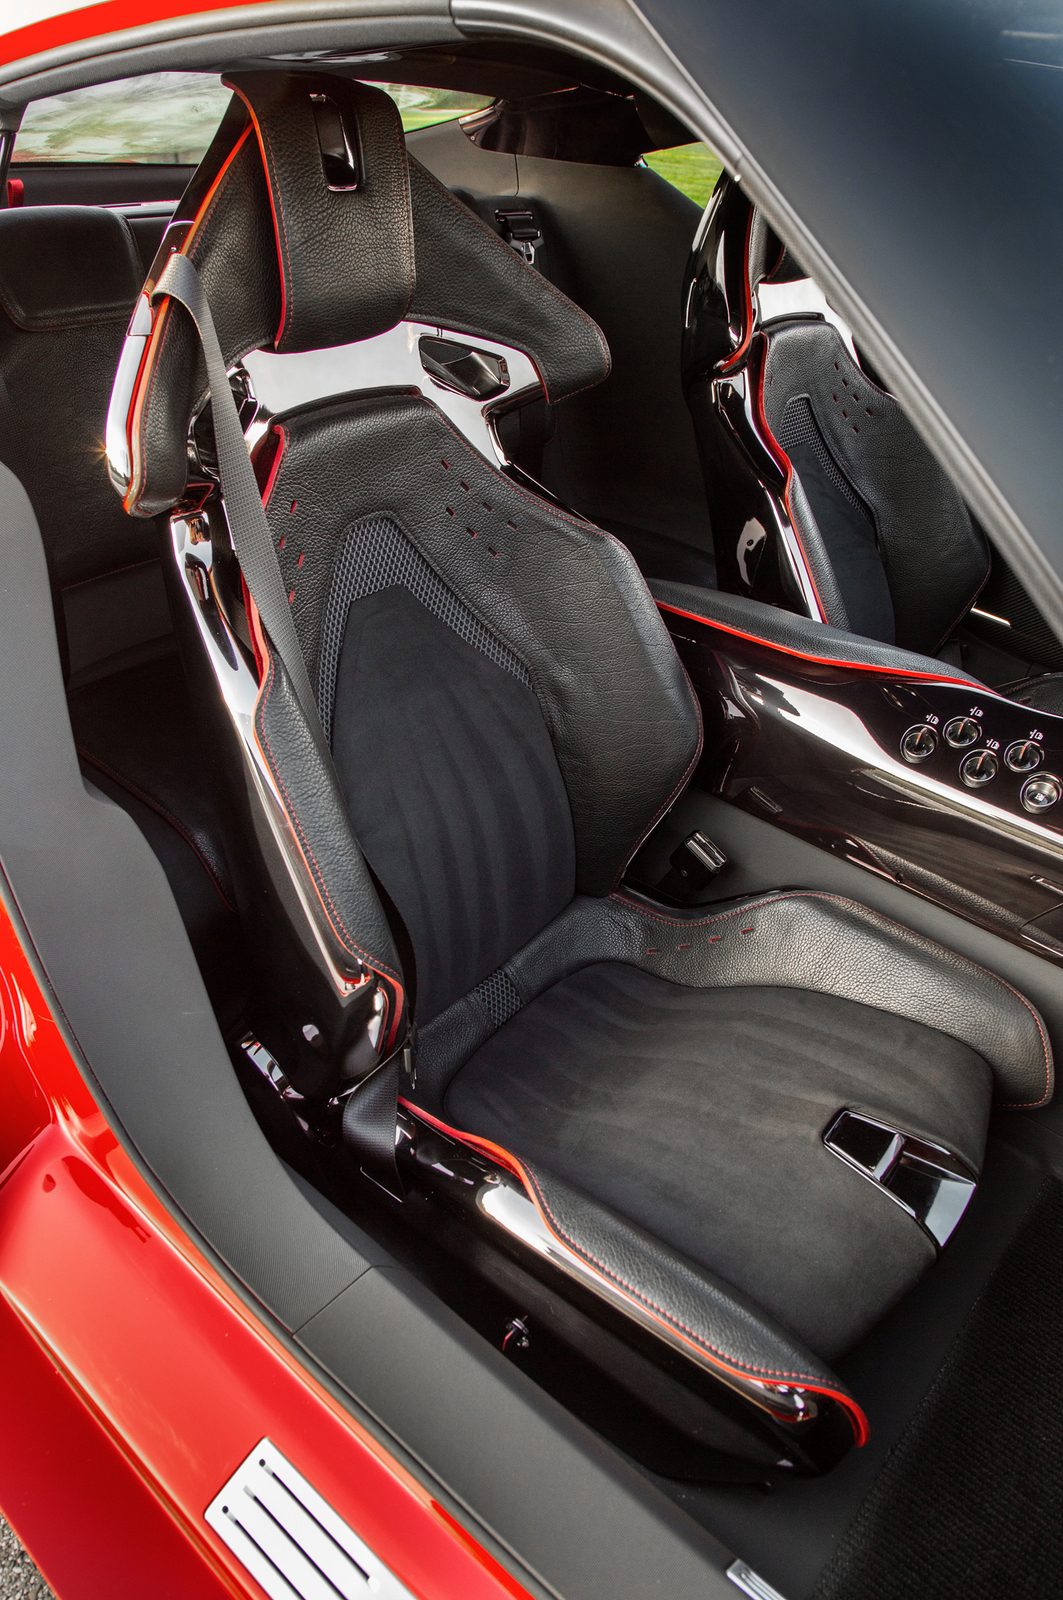 Toyota-FT-1-interior-seats.jpg